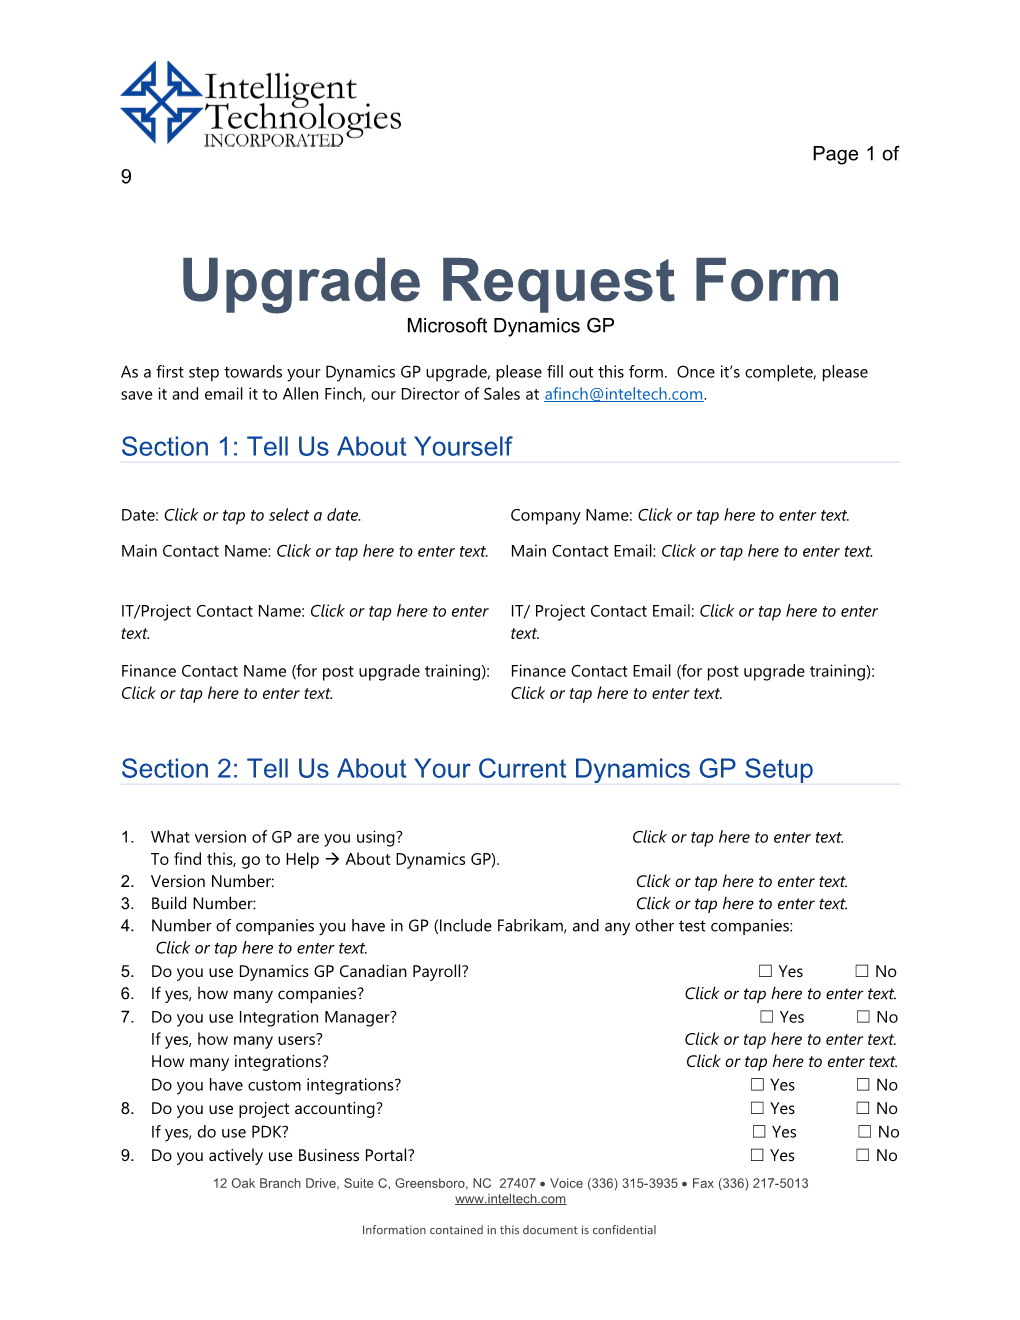 Upgrade Request Form